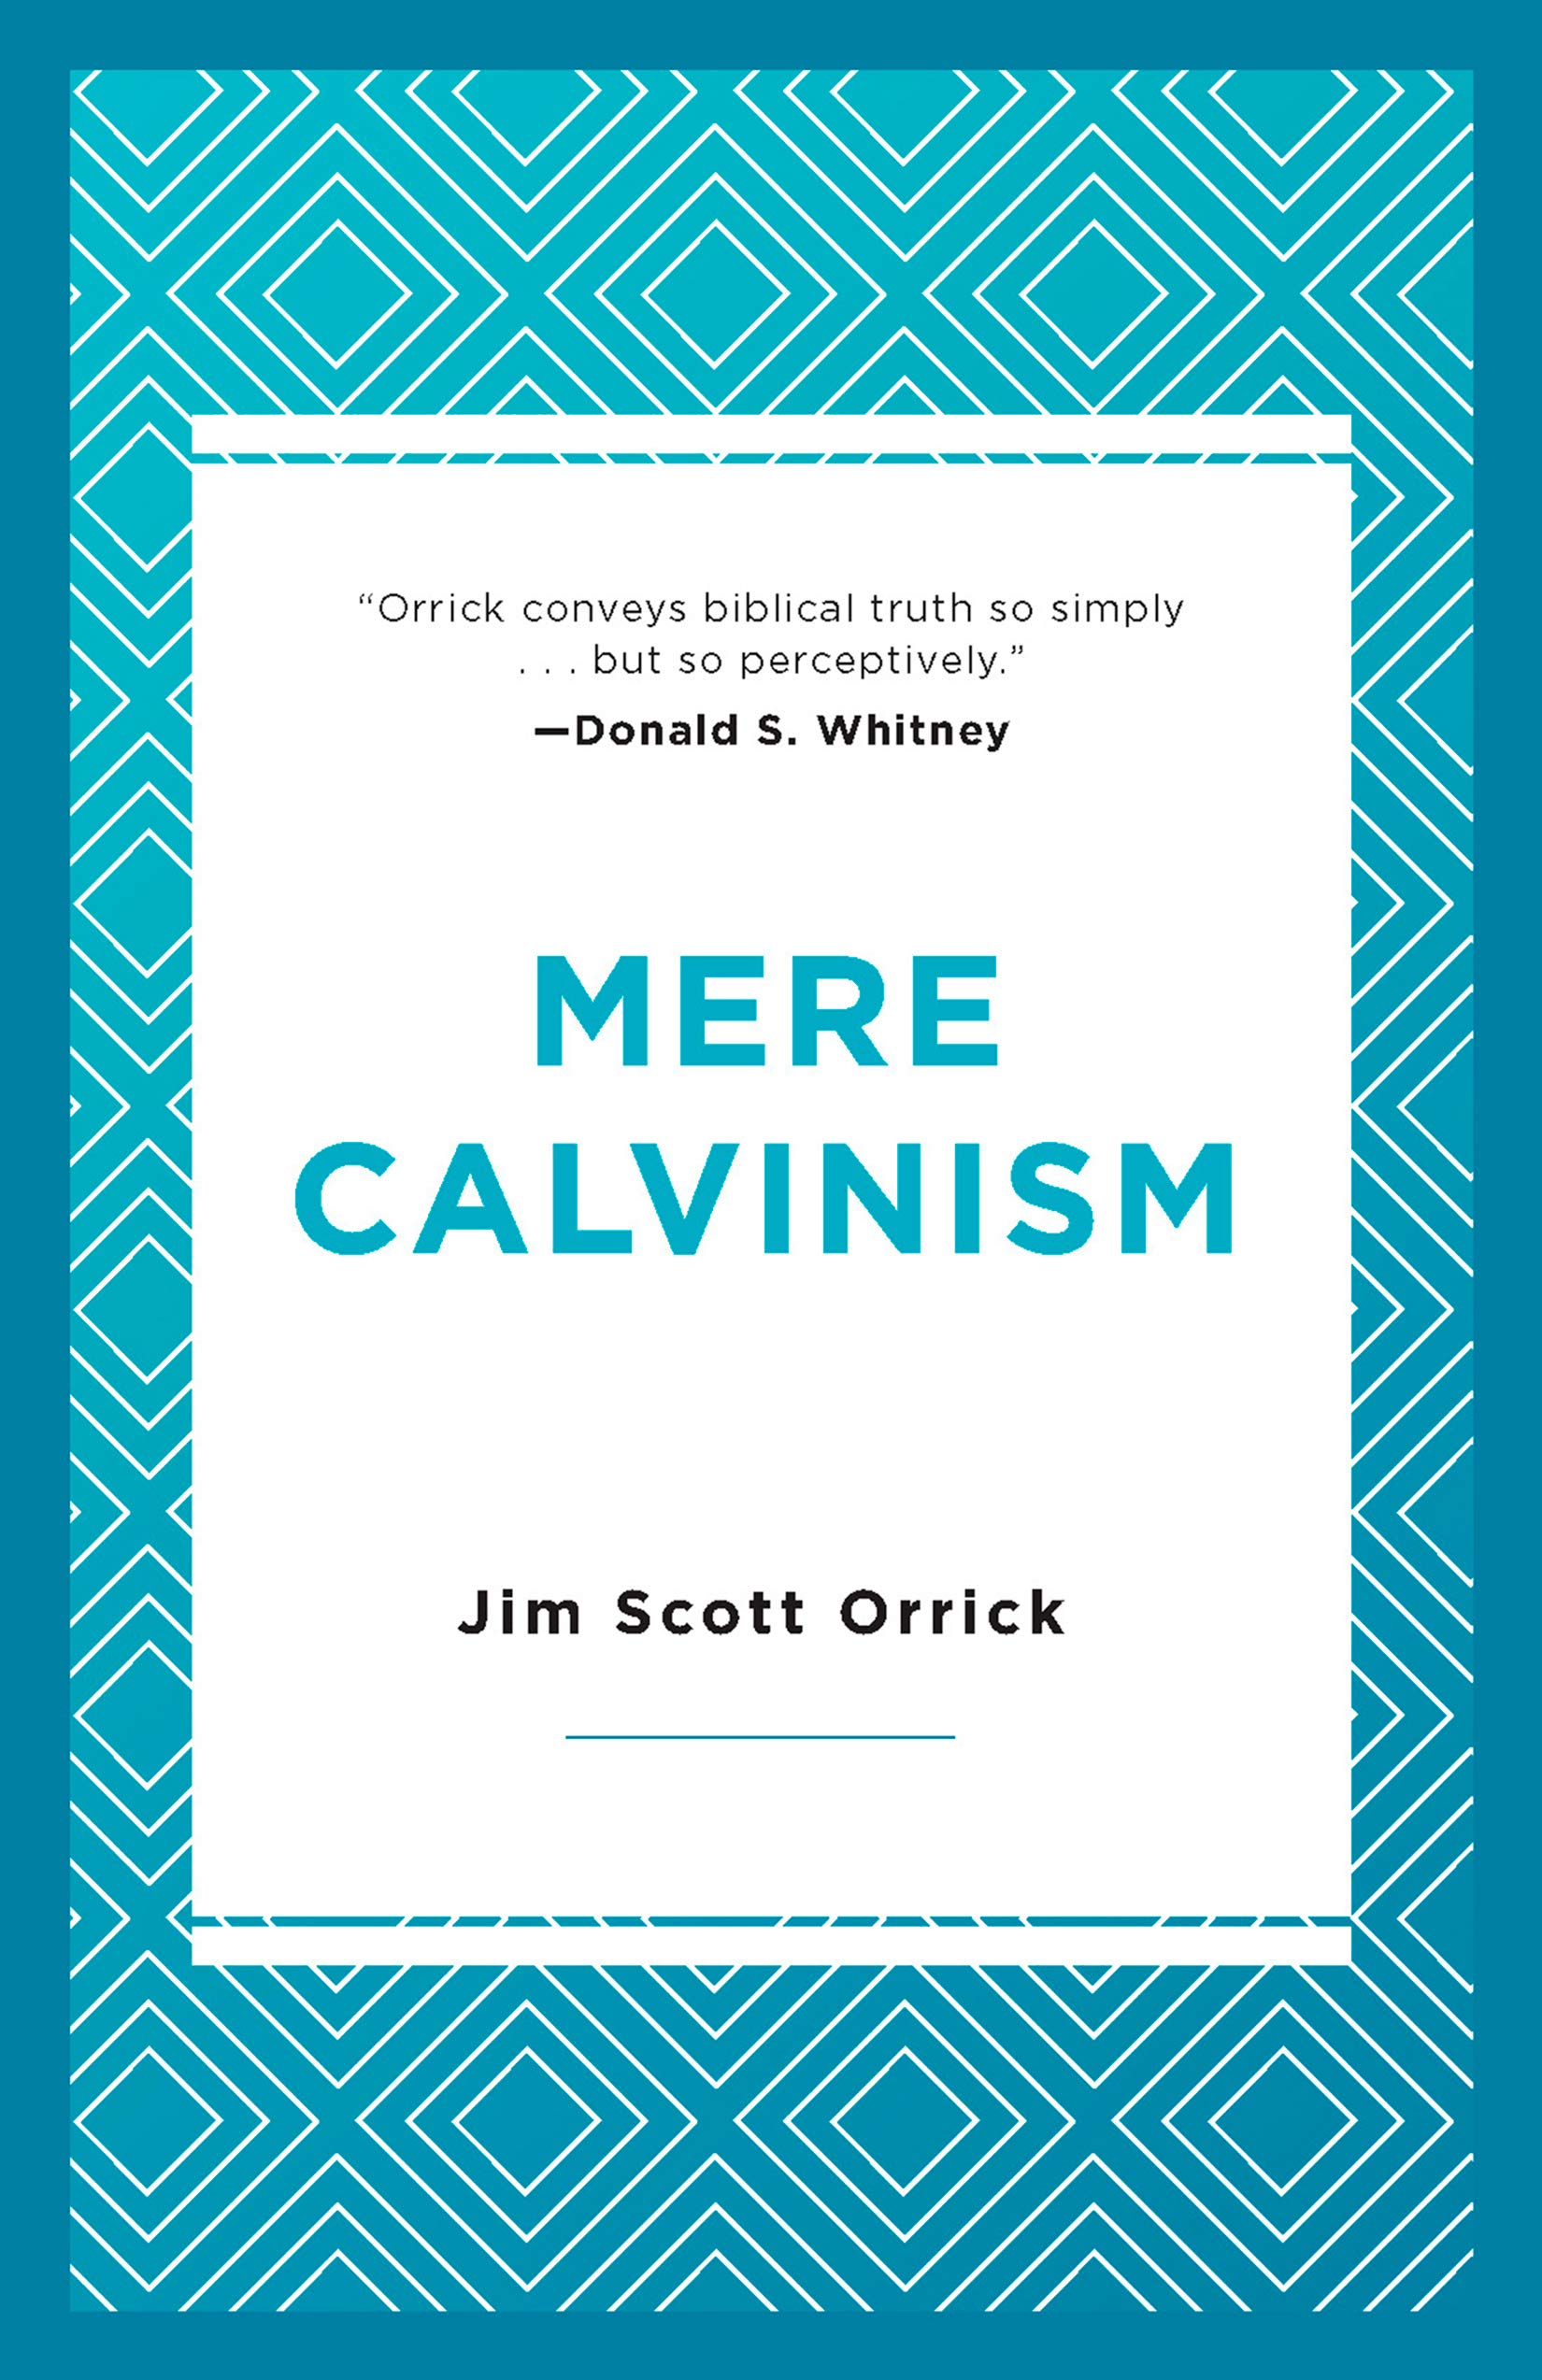 Book Notice: MERE CALVINISM, by Jim Scott Orrick